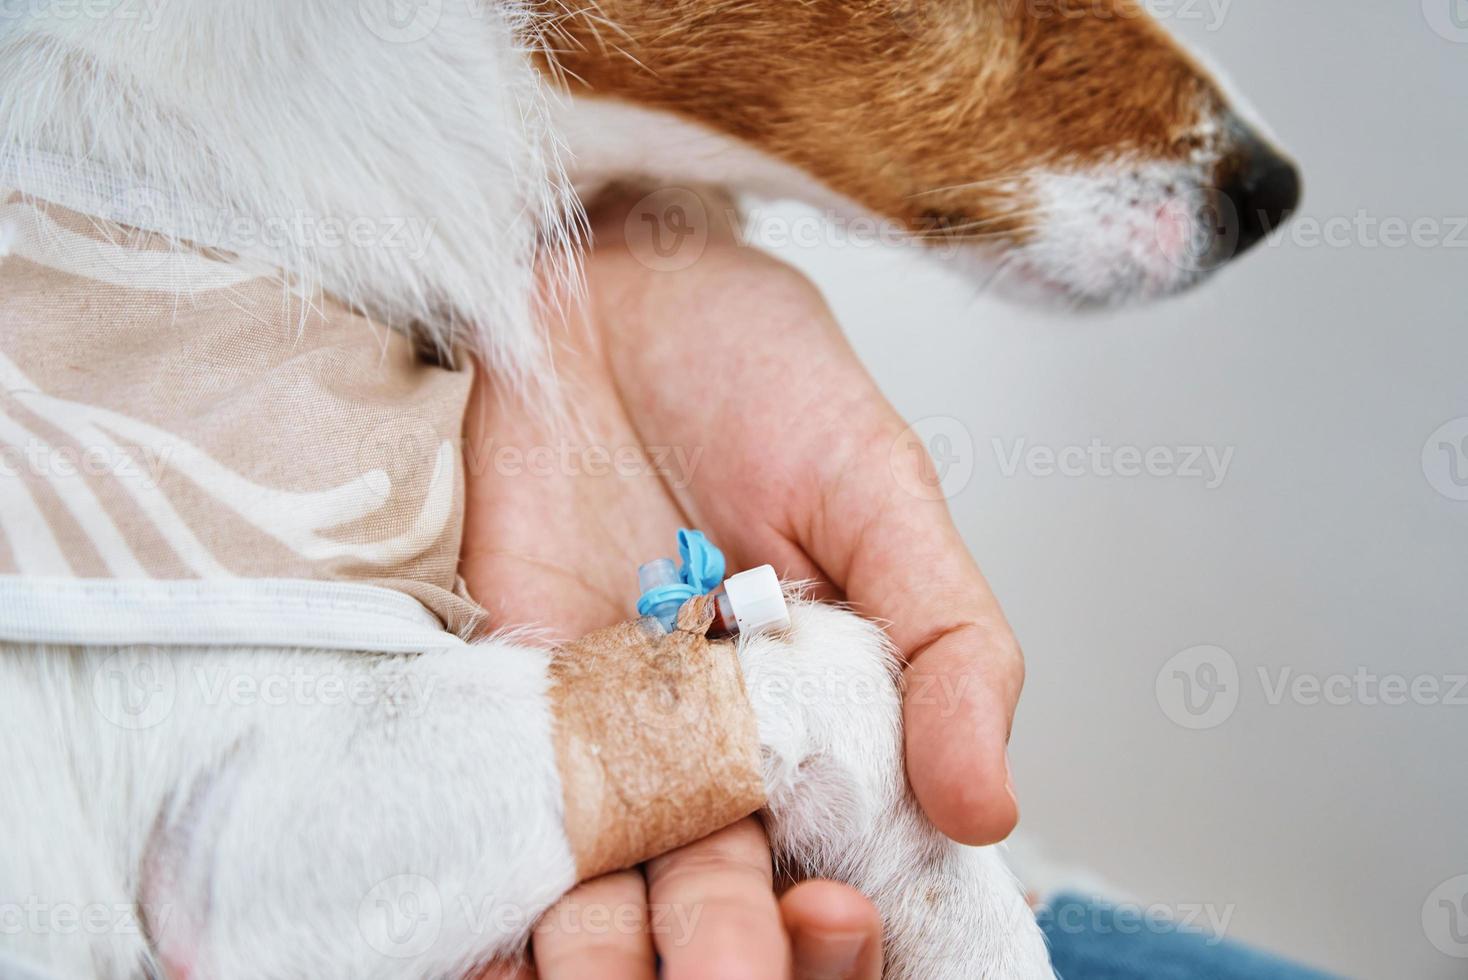 Dog with a bandaged catheter on his paw. Pet care photo